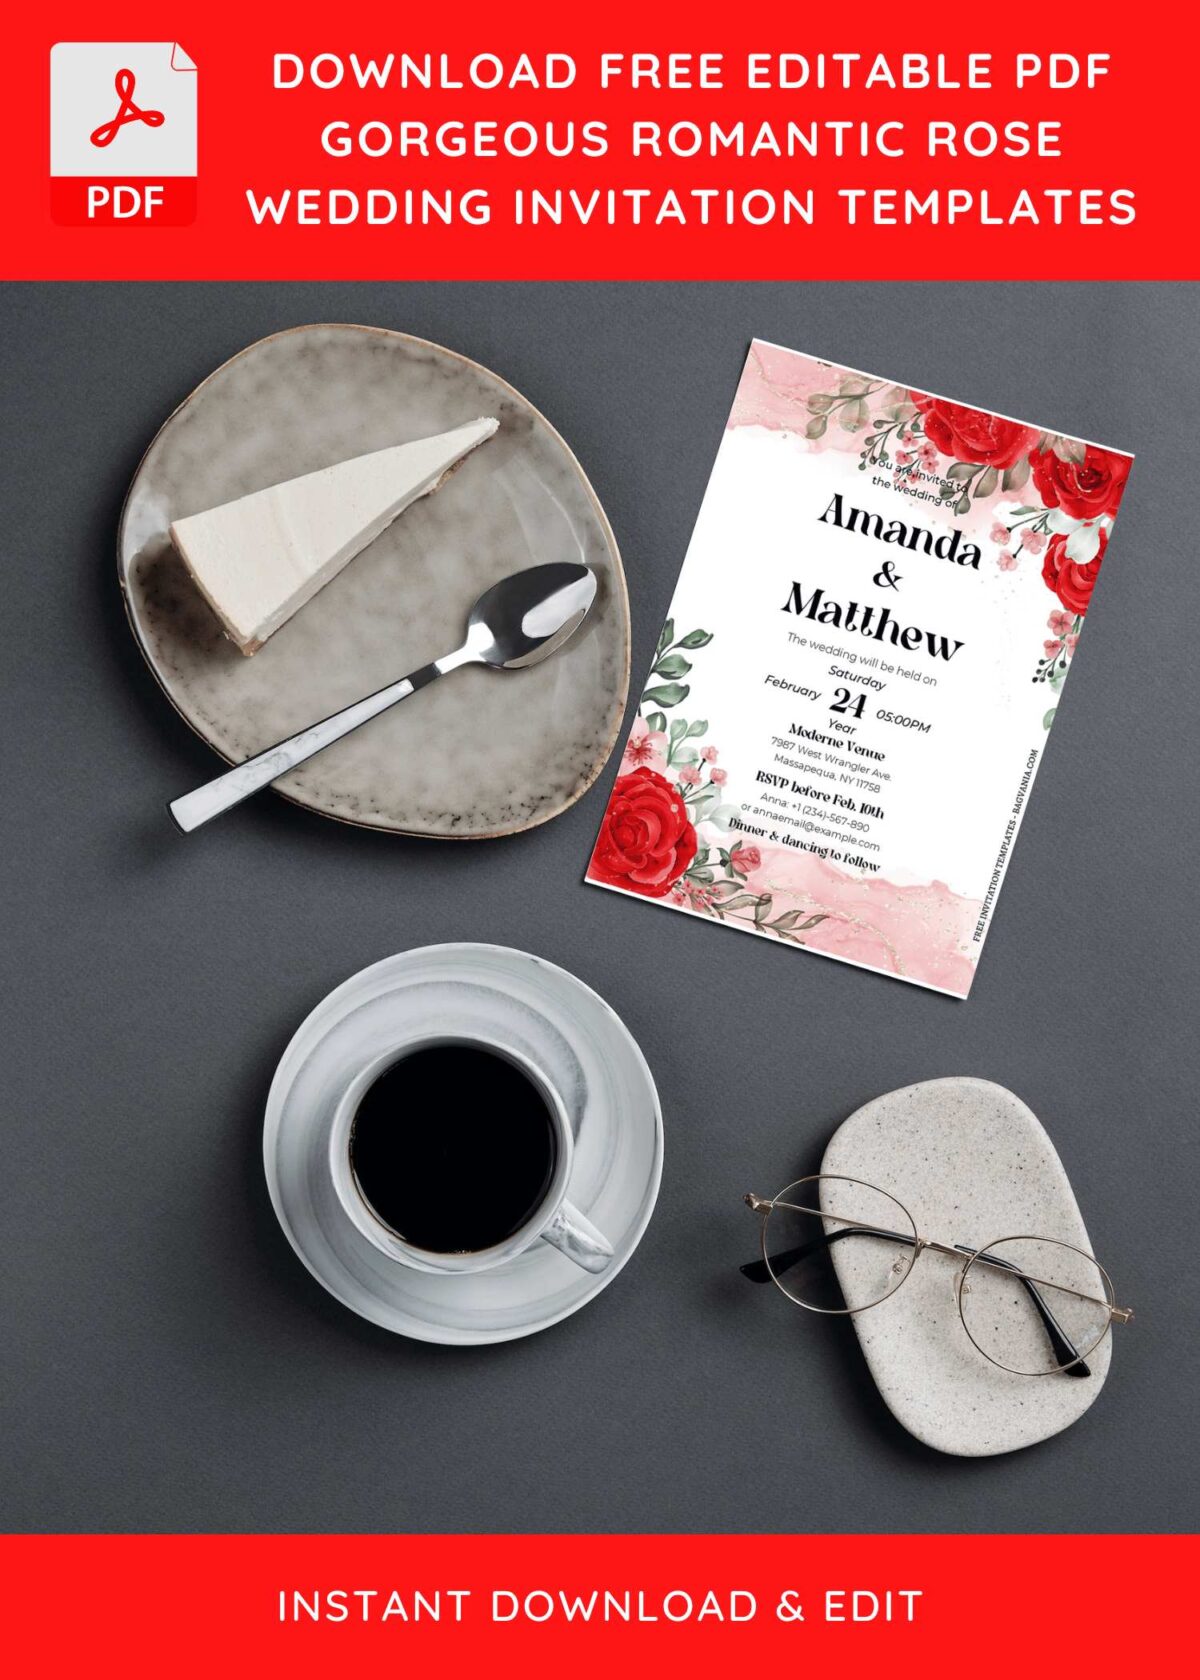 (Free Editable PDF) Romantic Bouquet Wedding Invitation Templates G